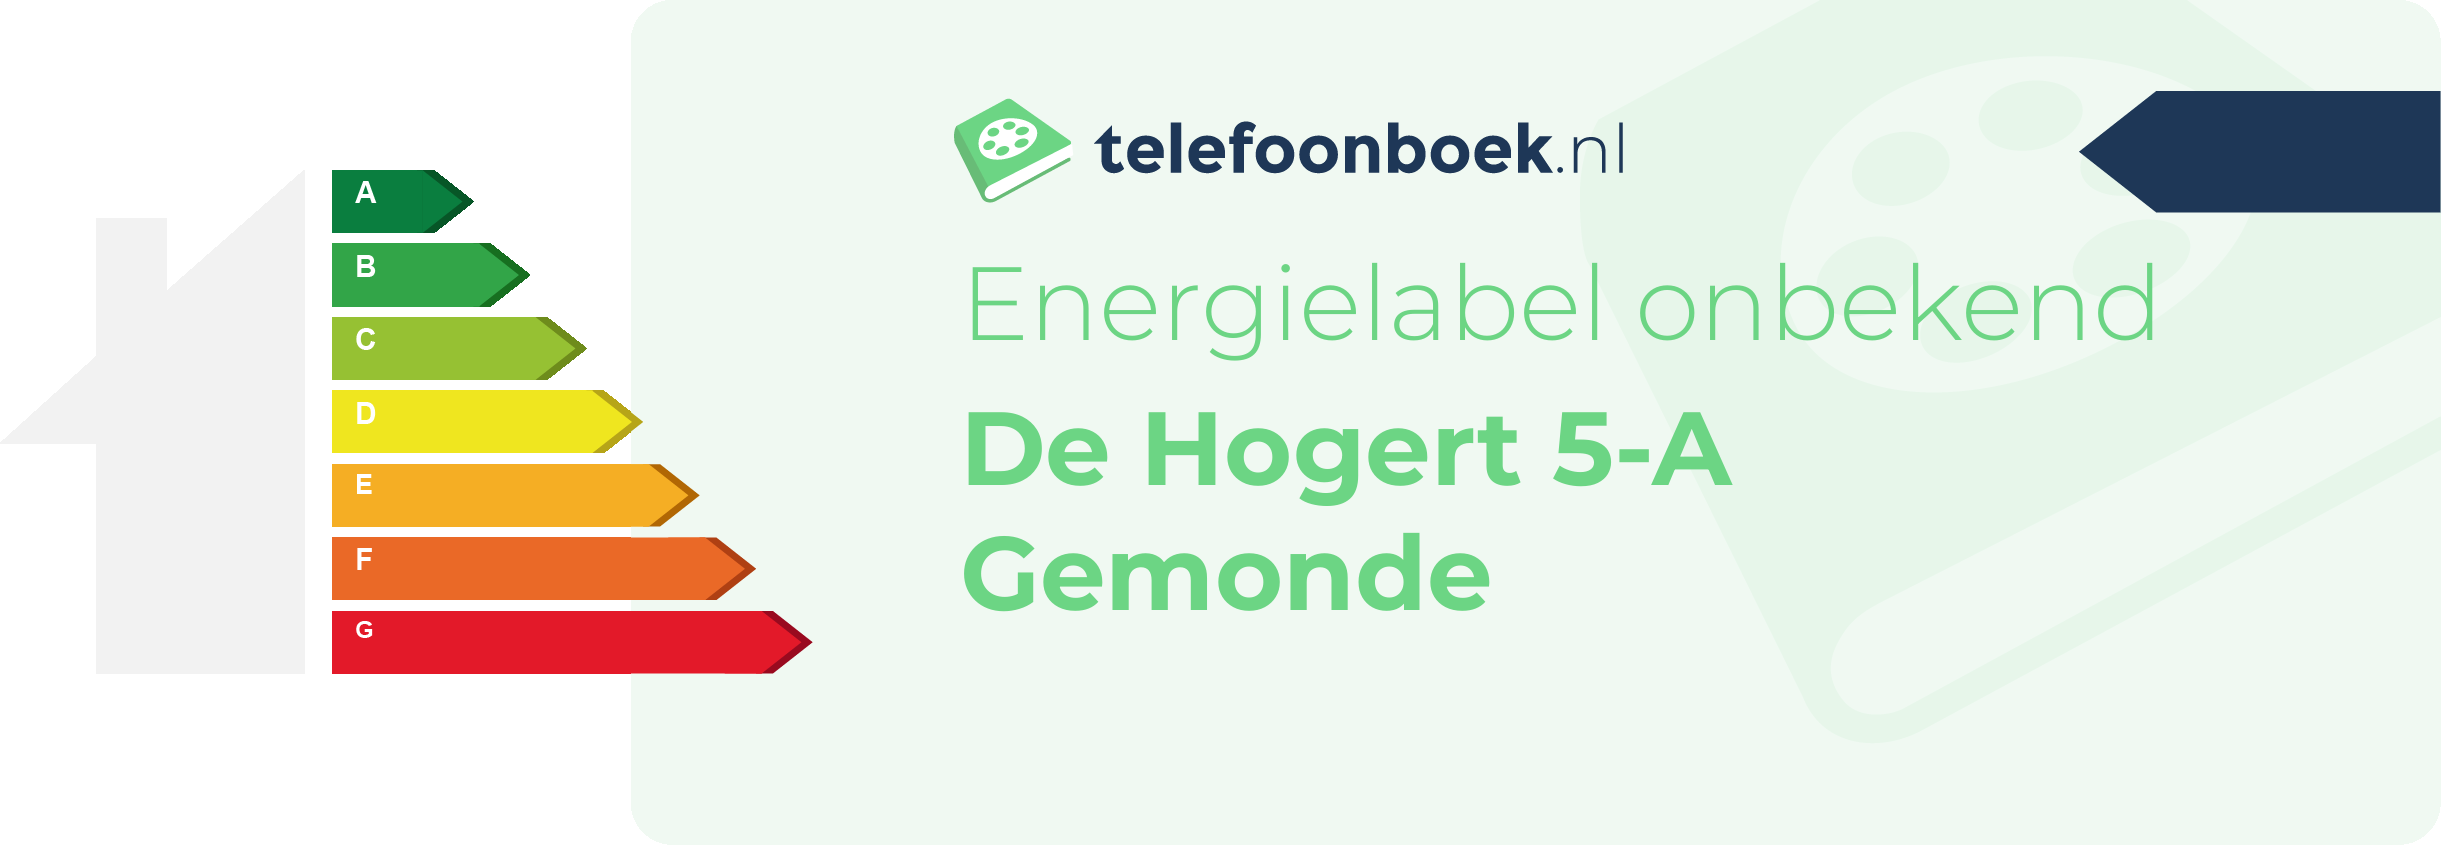 Energielabel De Hogert 5-A Gemonde